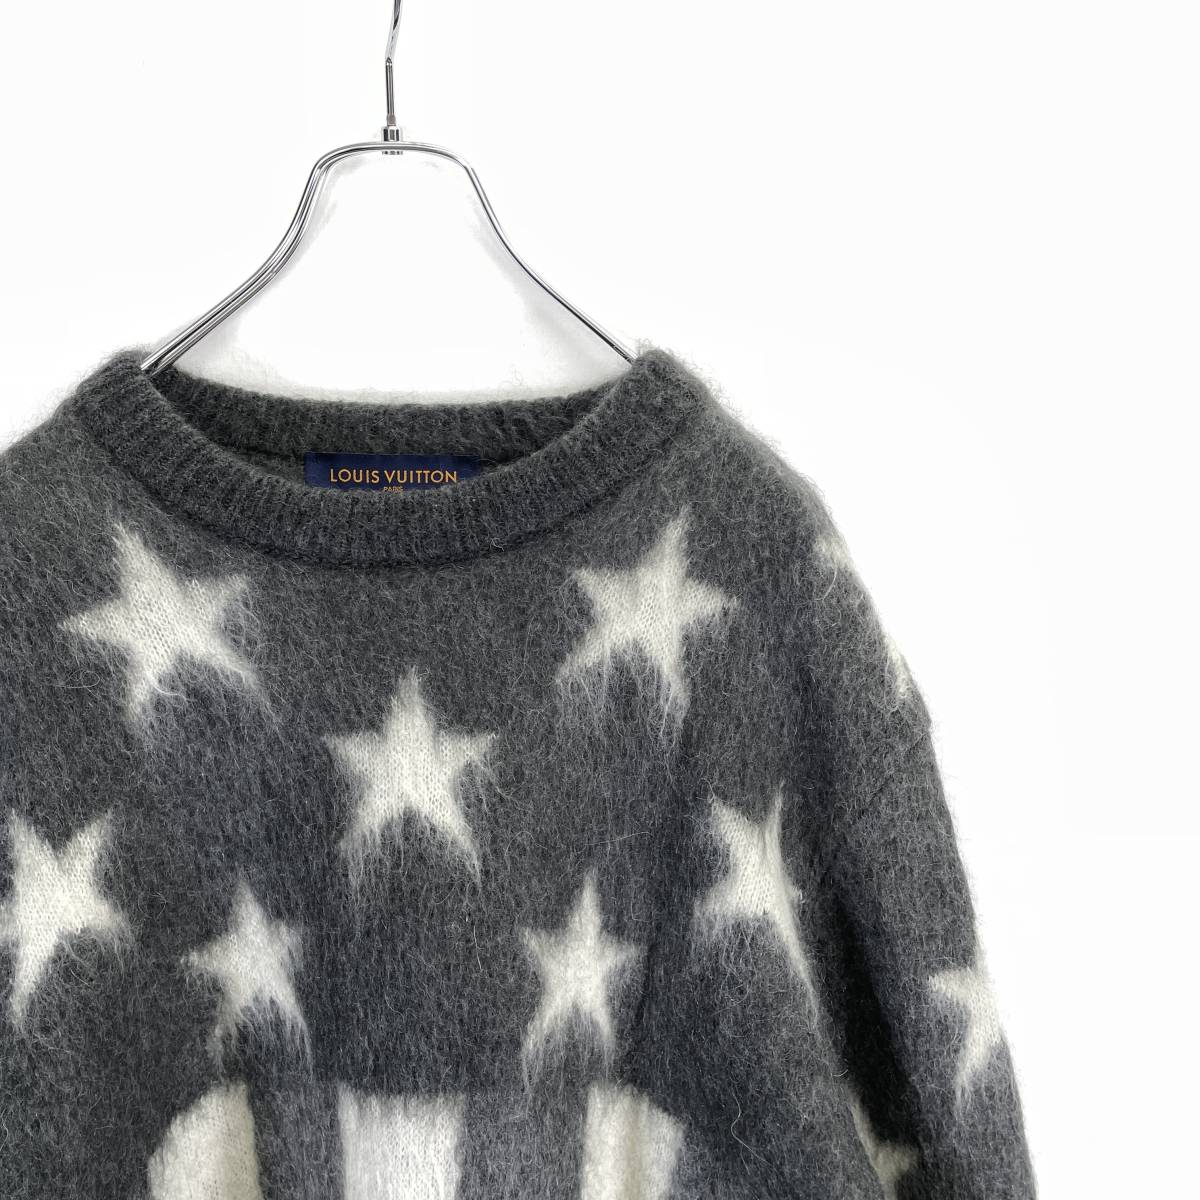 LOUIS VUITTON ルイヴィトン 星条旗 モヘヤ混 ニット セーター未使用数回使用程度の超美品